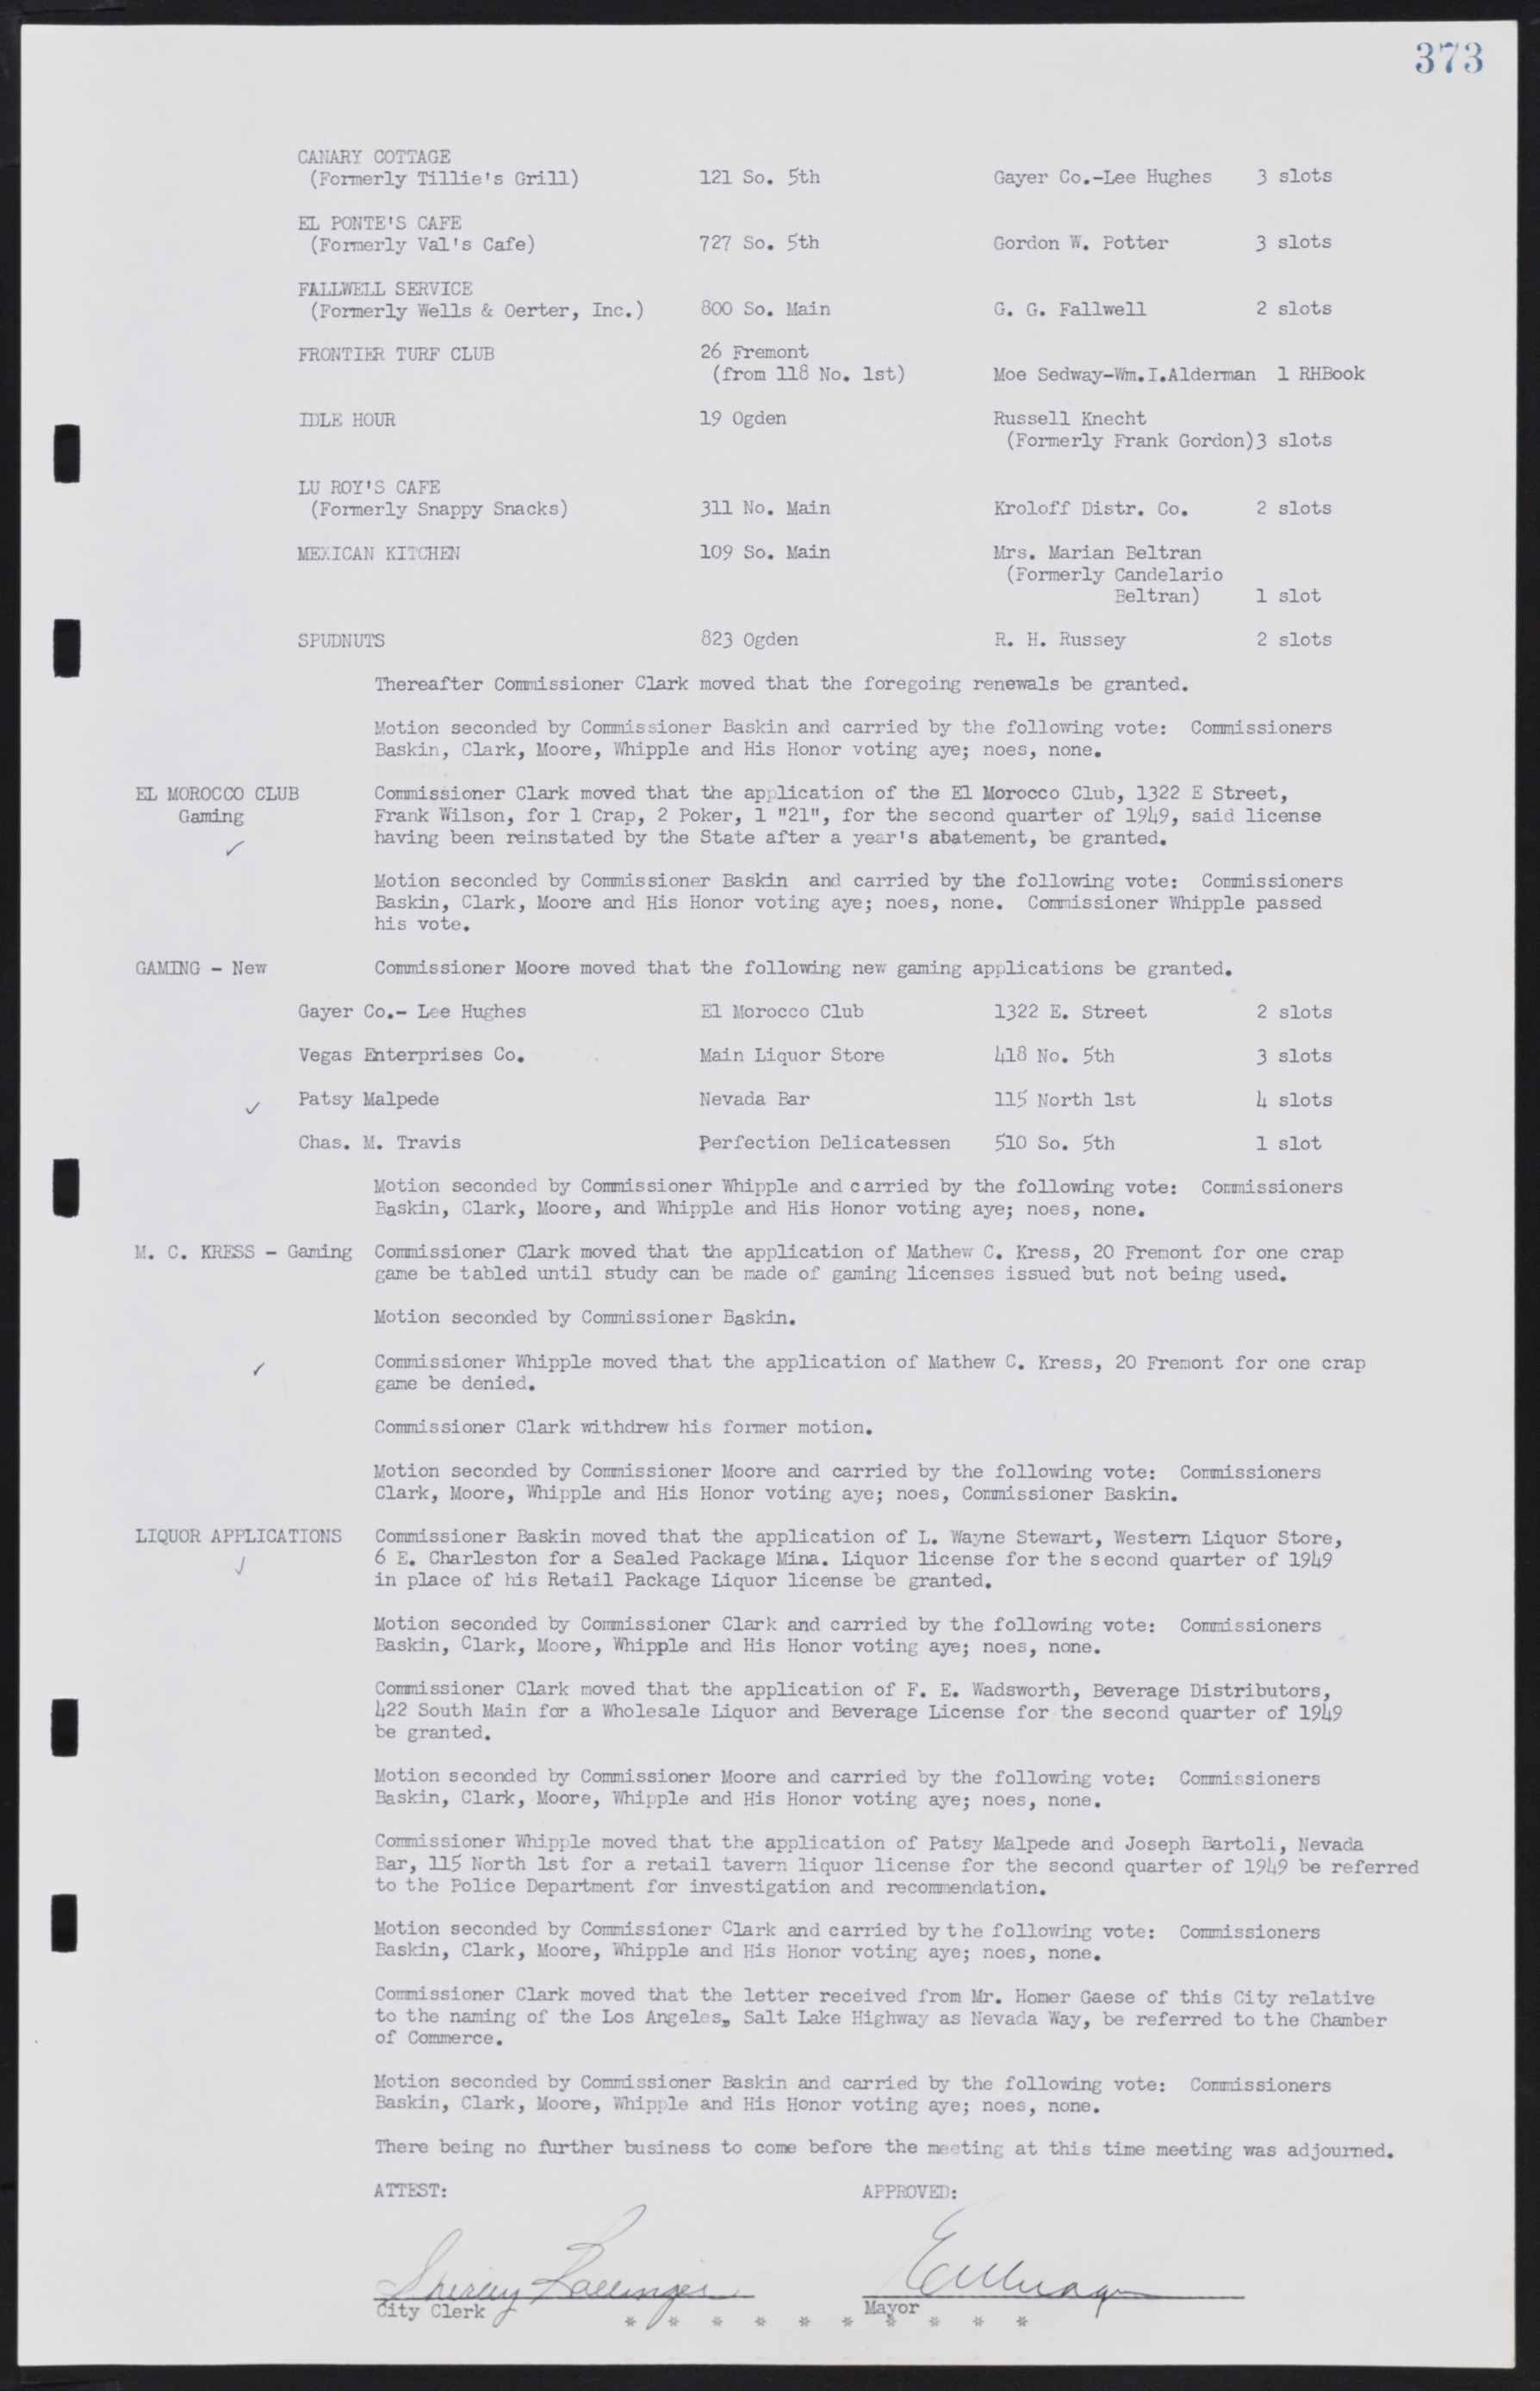 Las Vegas City Commission Minutes, January 7, 1947 to October 26, 1949, lvc000006-403